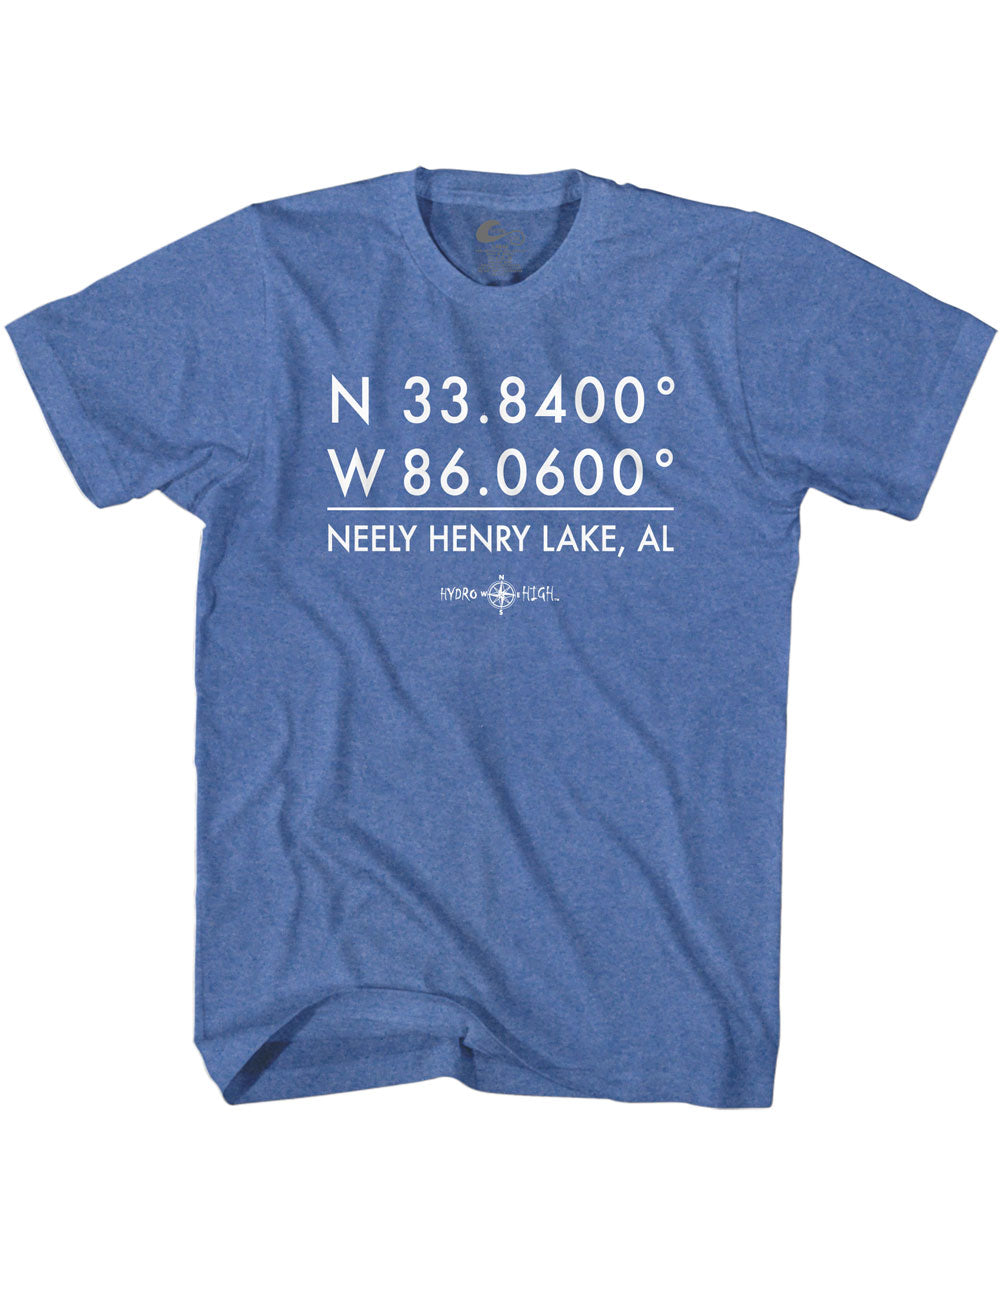 Neely Henry Lake GPS Coordinates T-Shirt